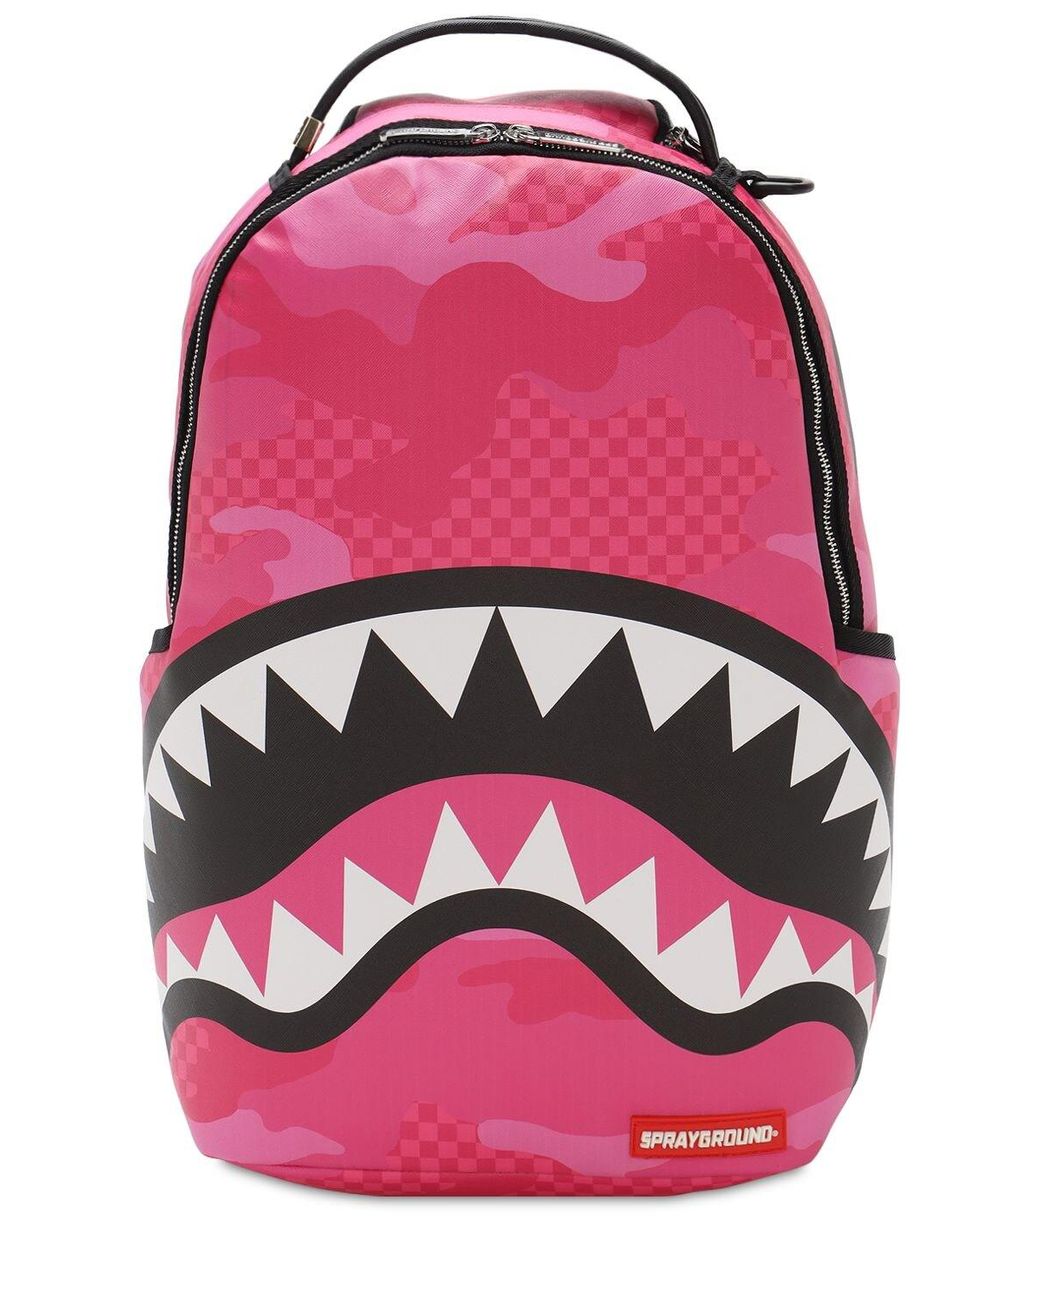 Sprayground Backpack in Fuchsia (Pink) for Men - Save 1% - Lyst